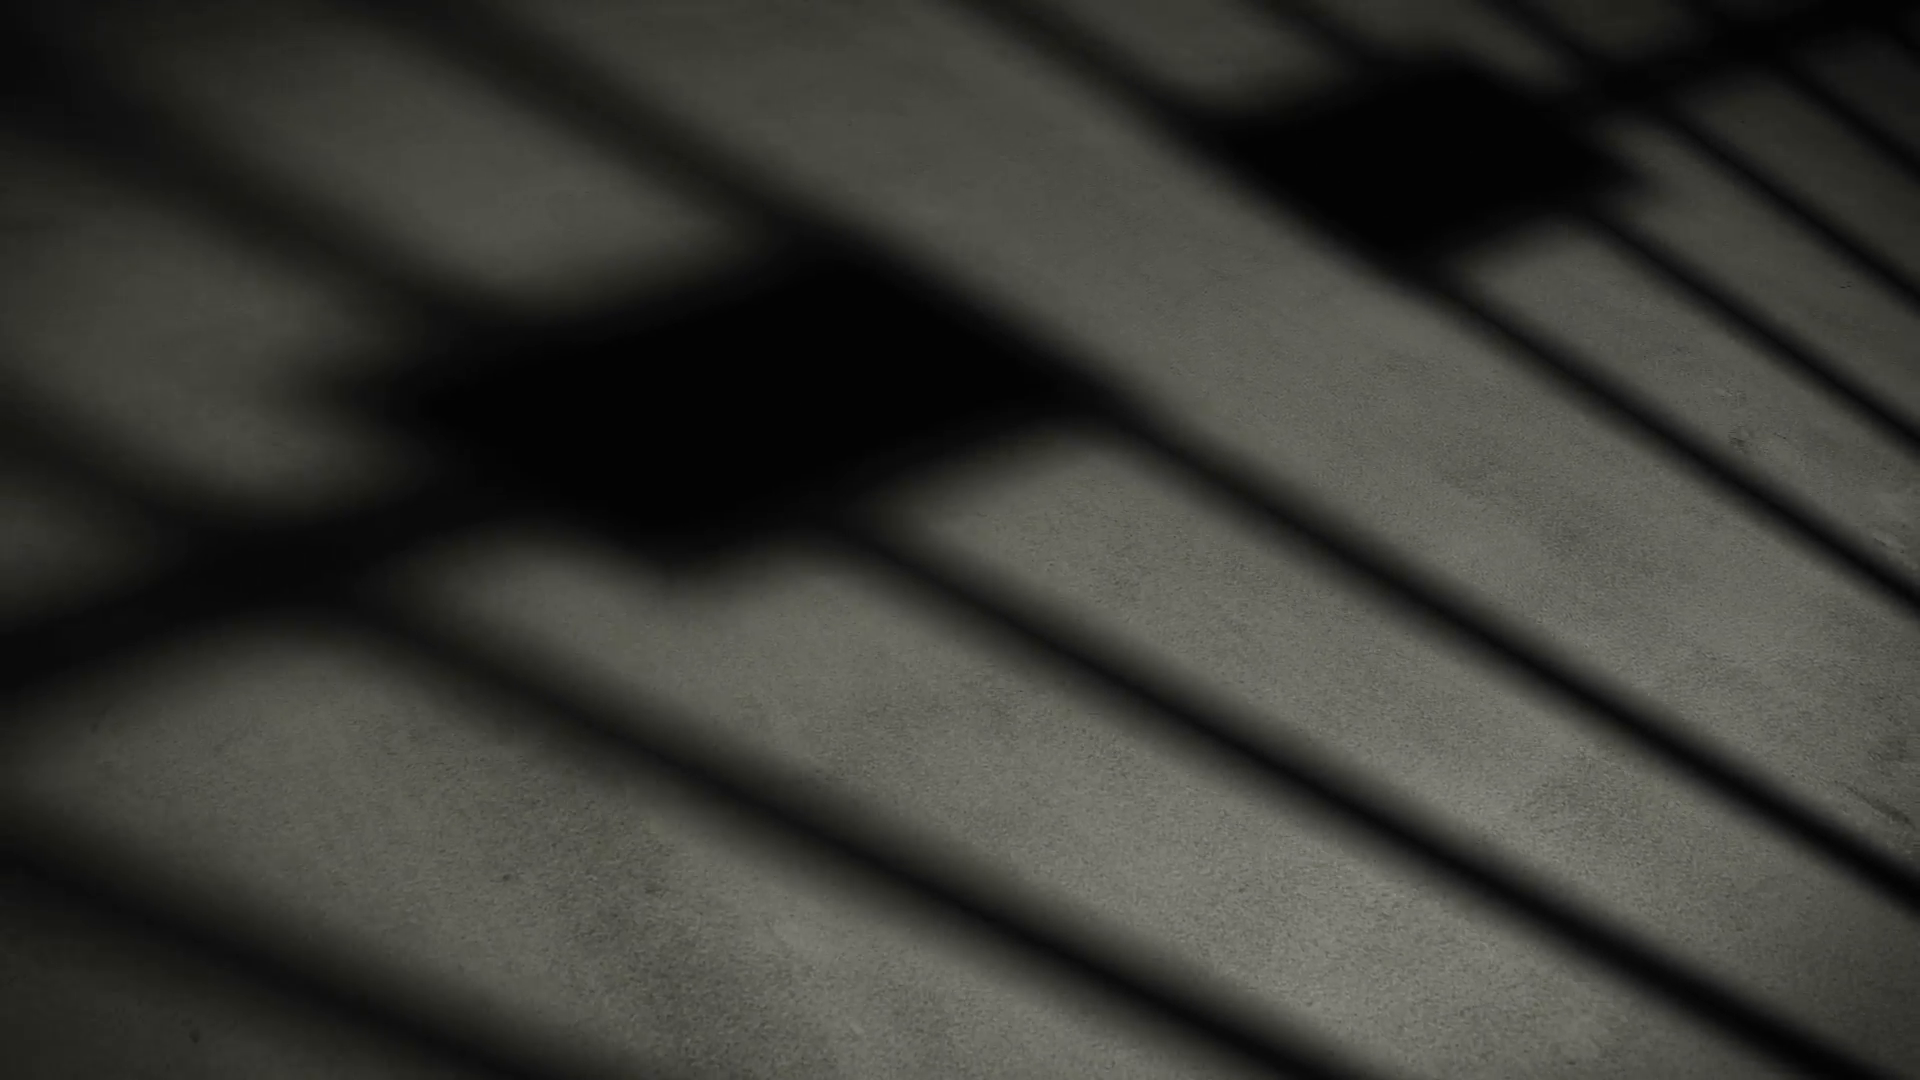 Prison cell door closing shadow on dark concrete jail floor ...